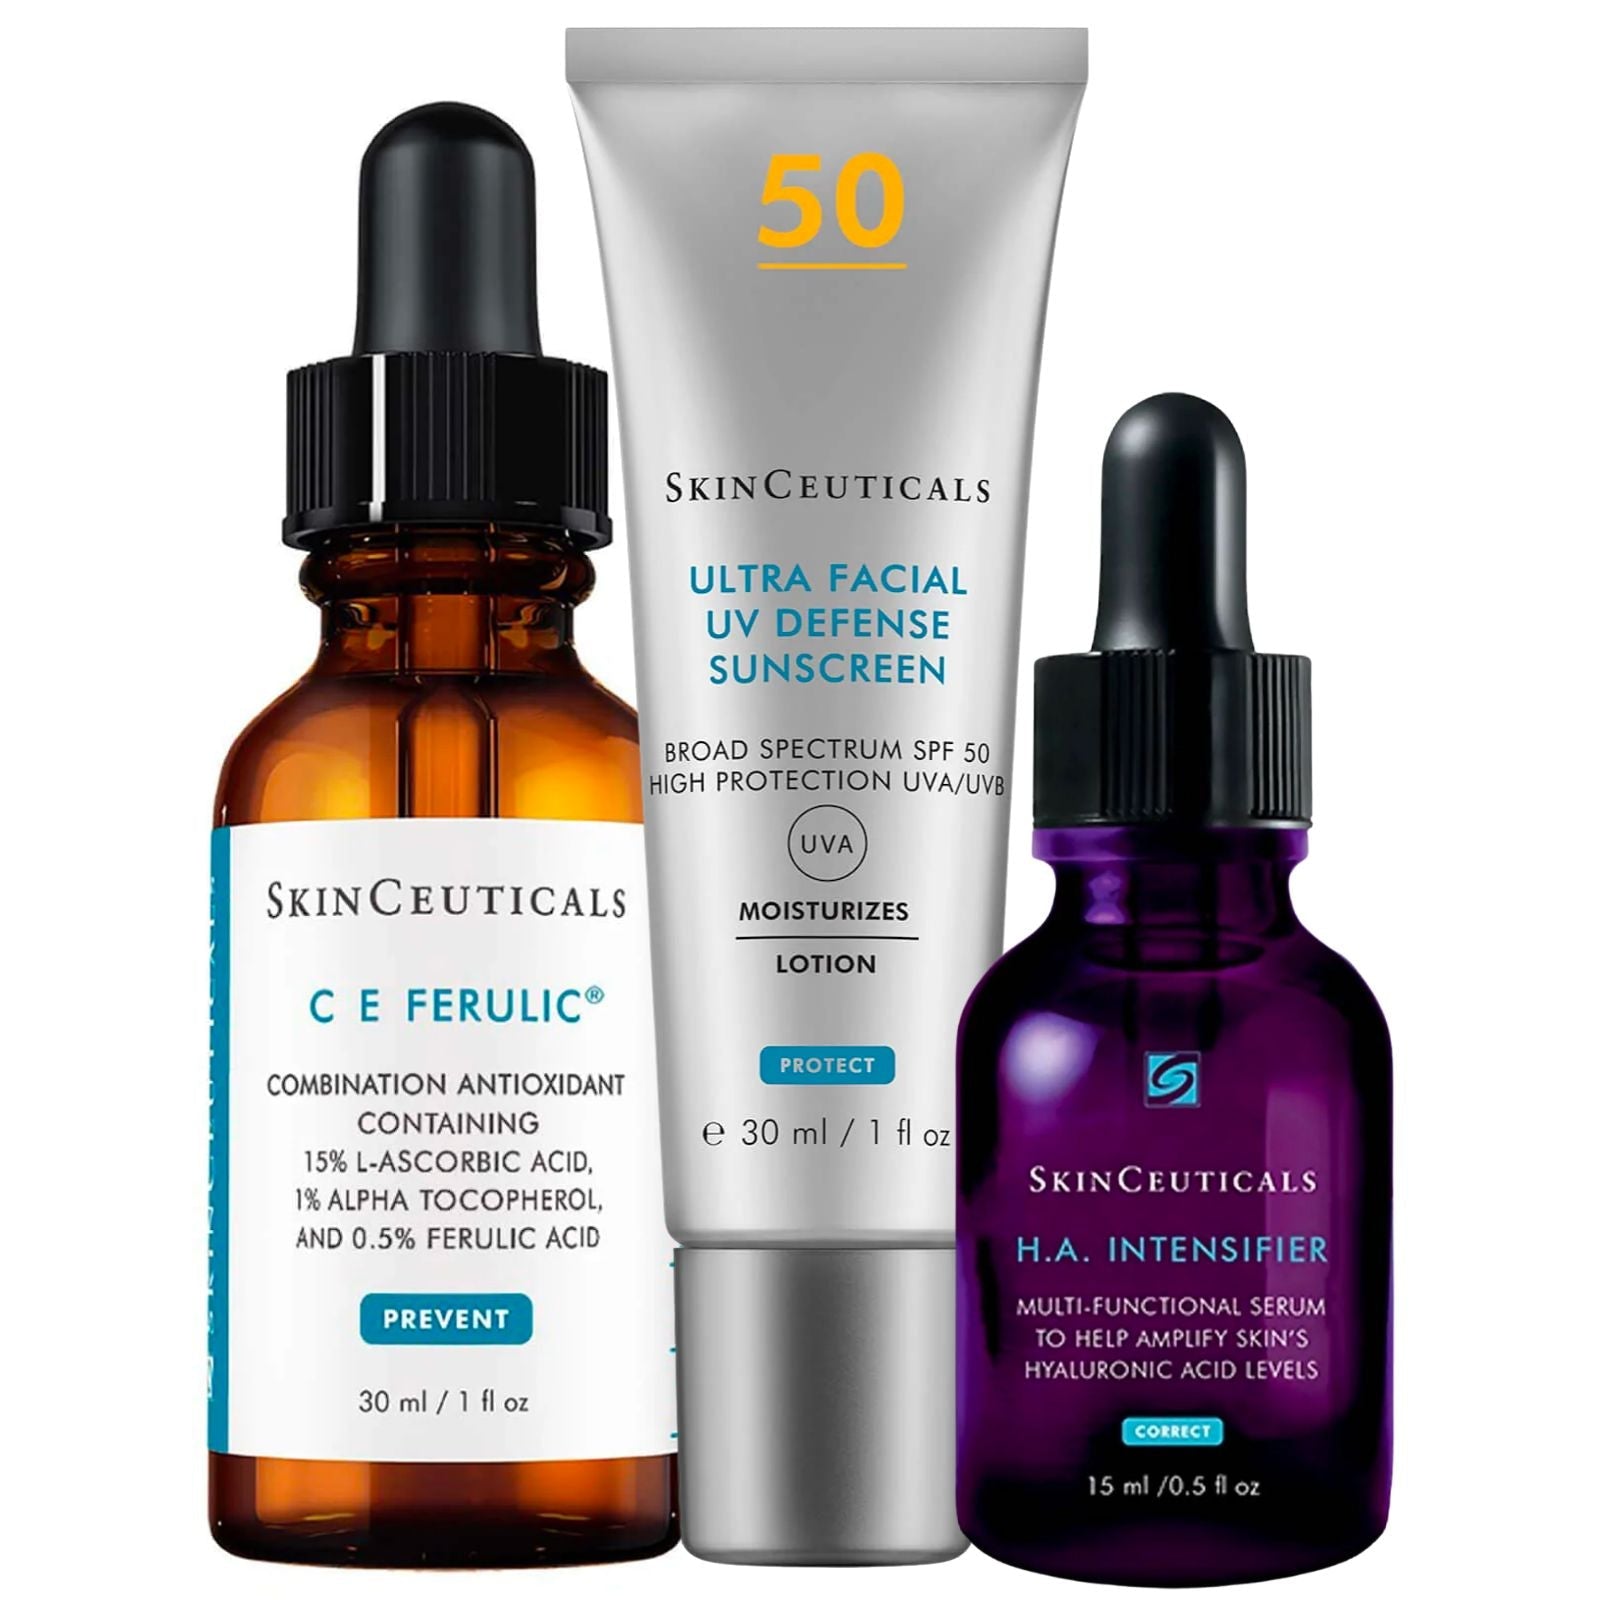 SkinCeuticals SkinCeuticals | SkinShop Exclusive Bundle - SkinShop